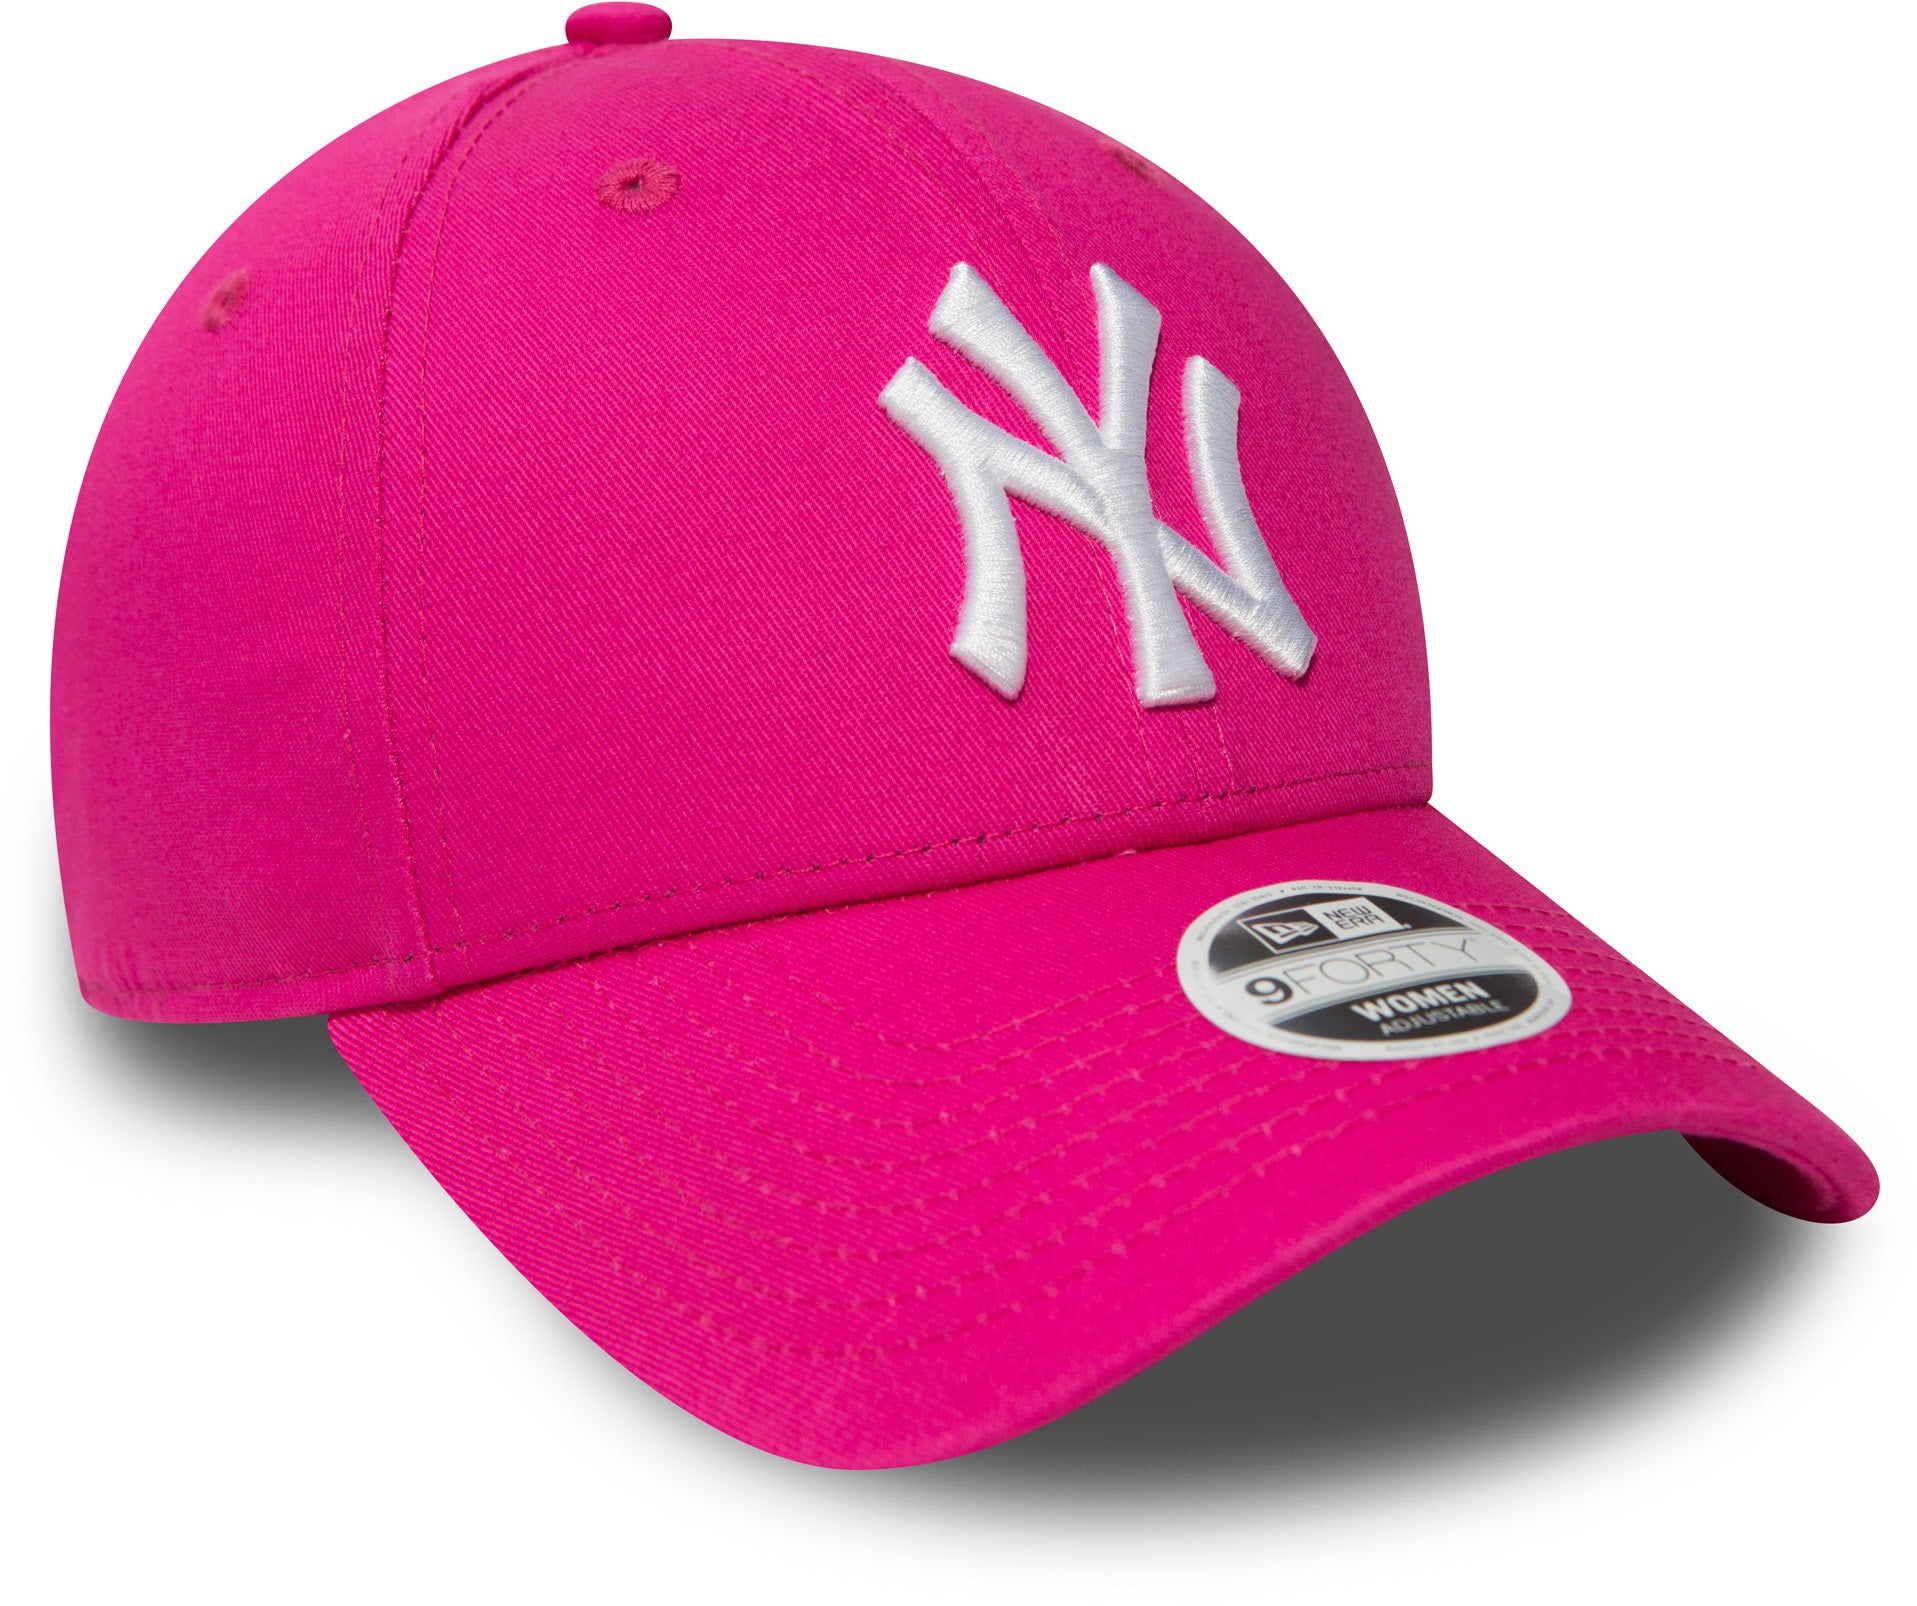 Girls Youth Las Vegas Raiders Pink Adjustable Hat